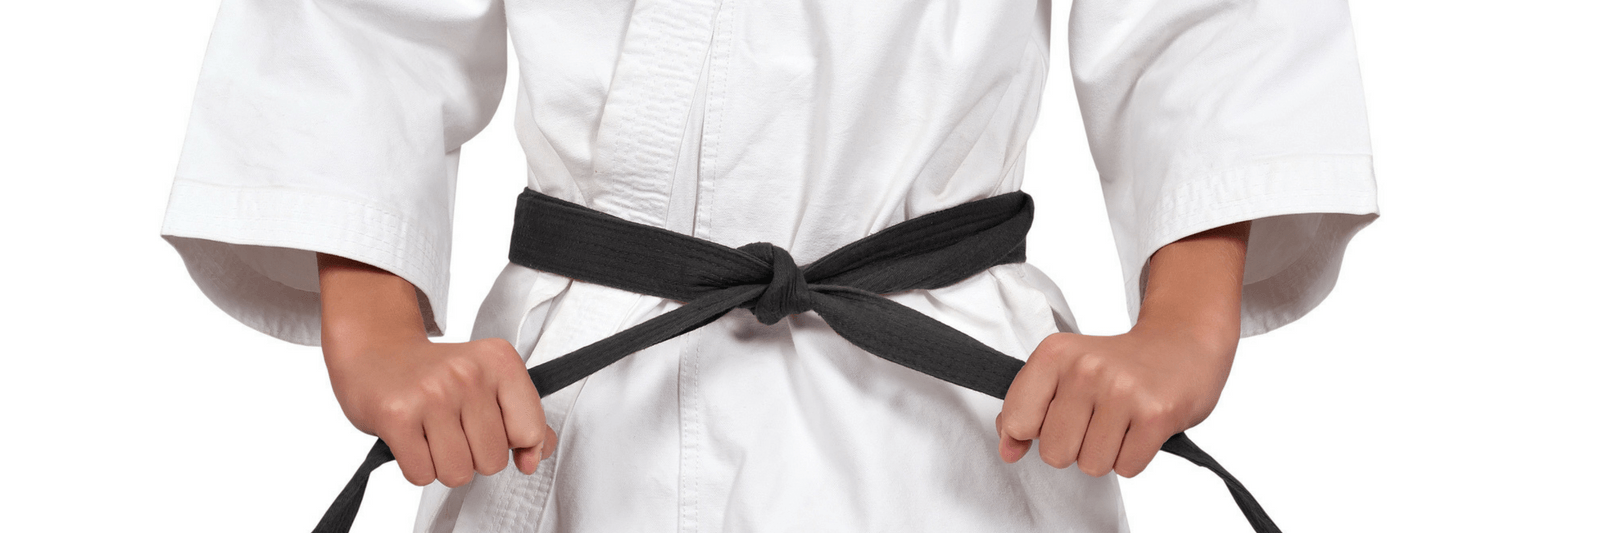 How to become a gift giving ninja